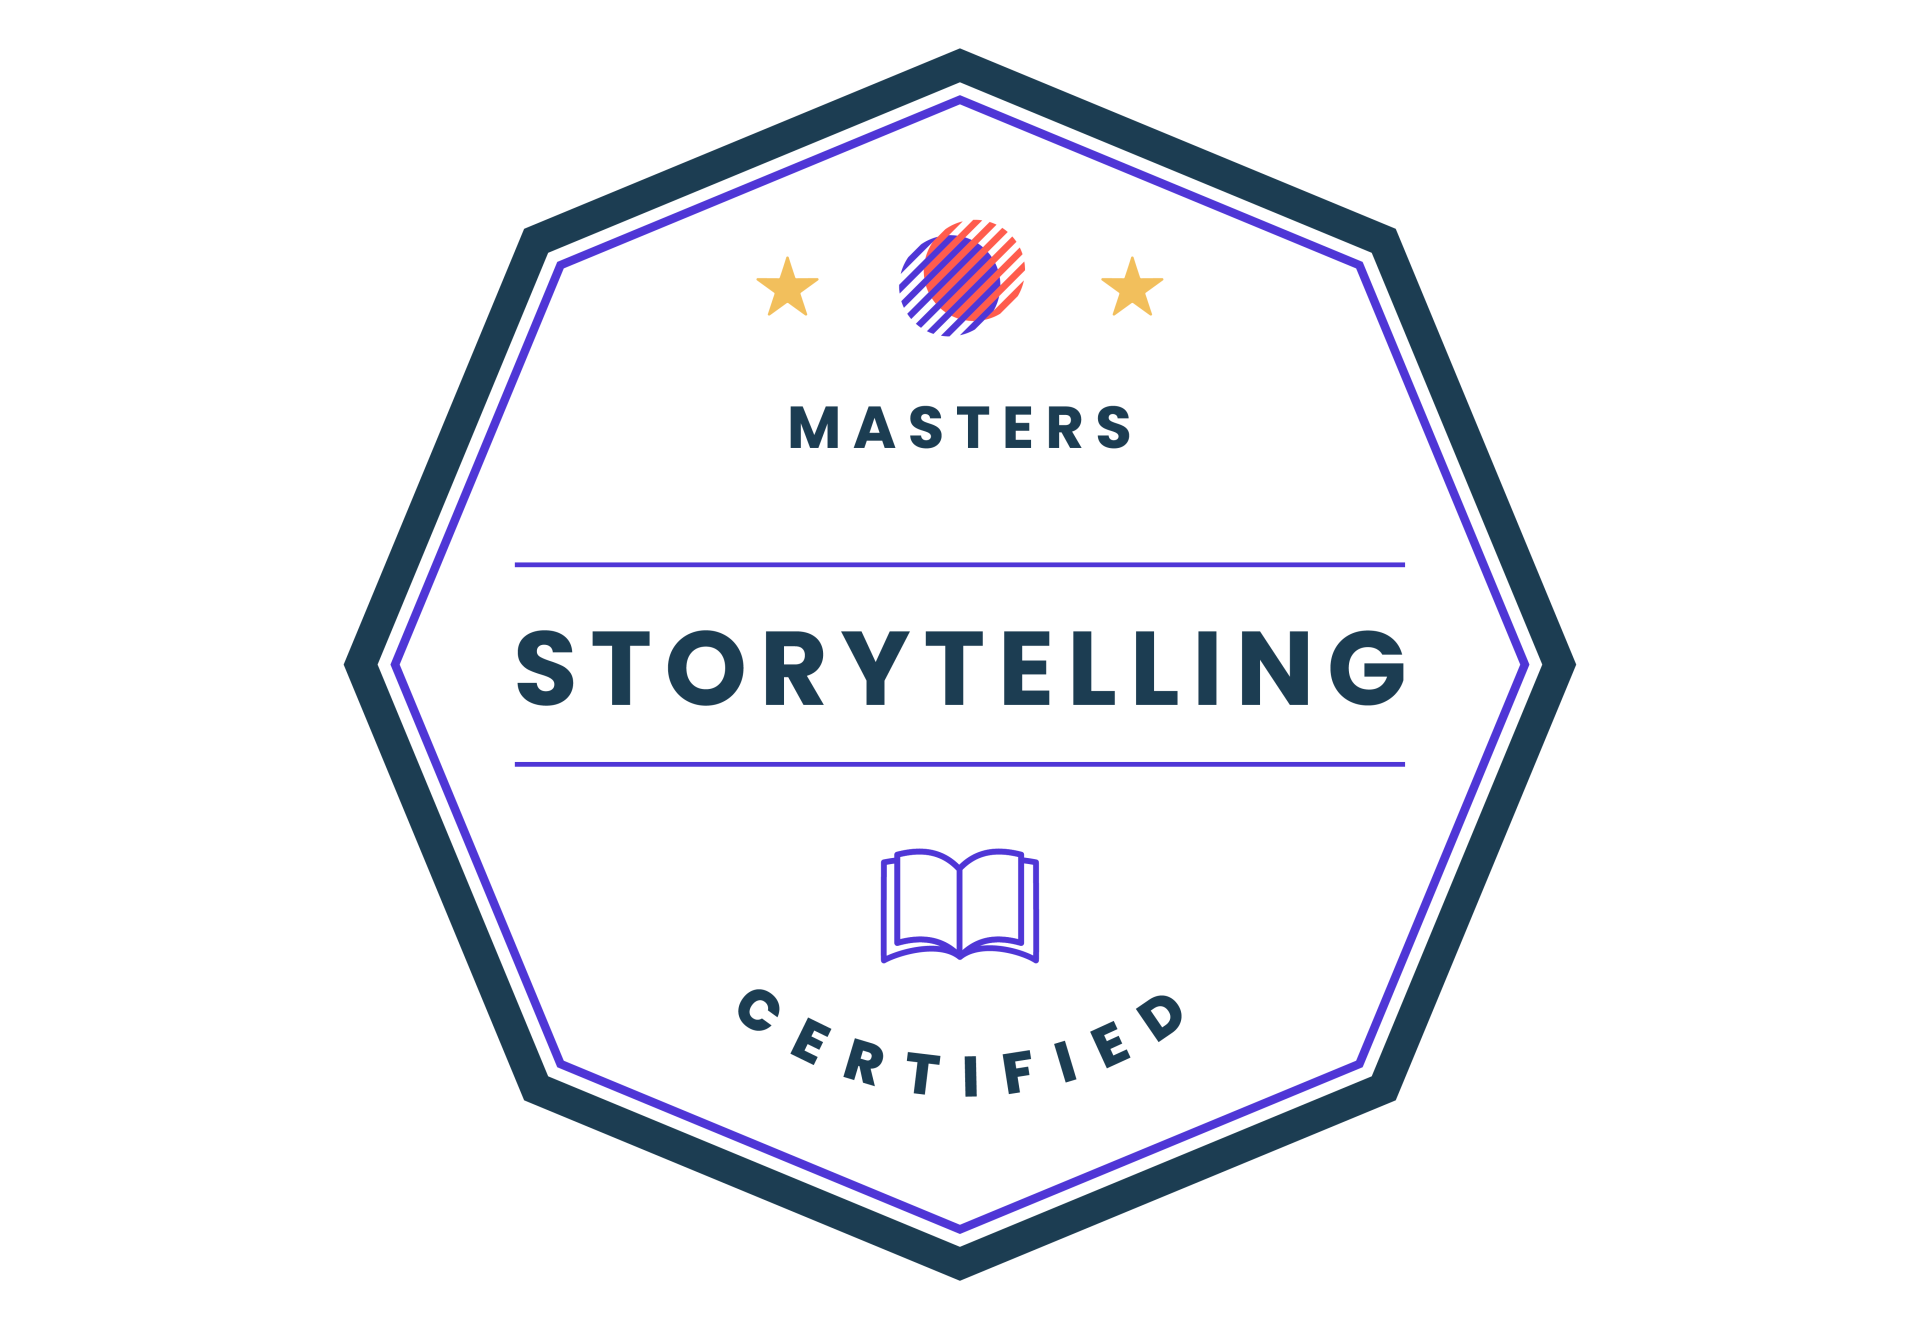 Storytelling Certified | Masters bade